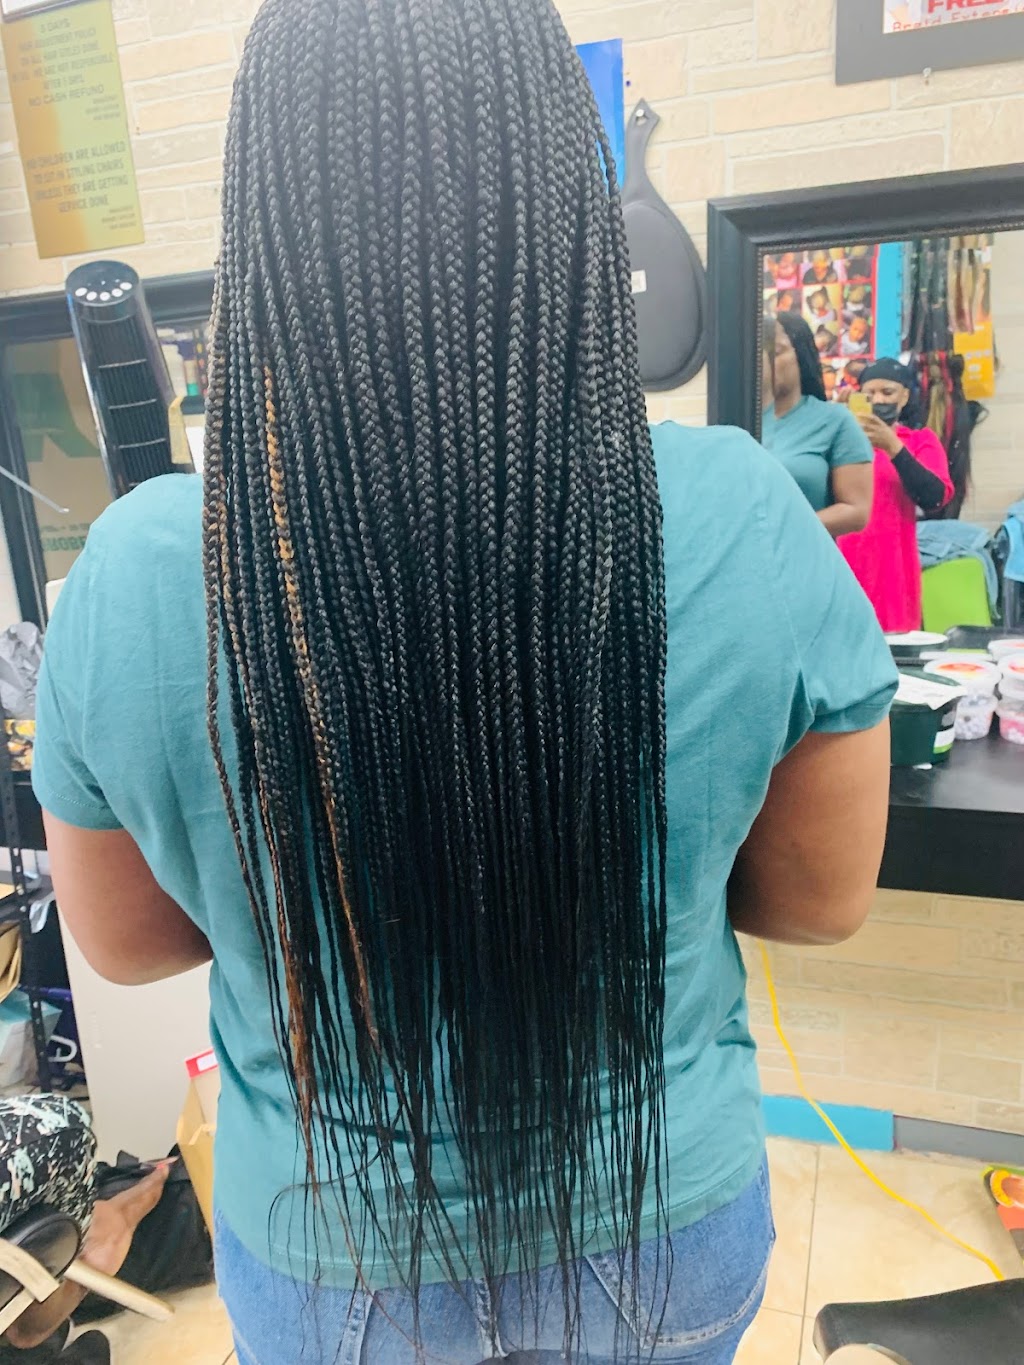 Miriam Hair Braiding in Unique Mall | 162-10 Jamaica Ave, Queens, NY 11432 | Phone: (917) 582-7896